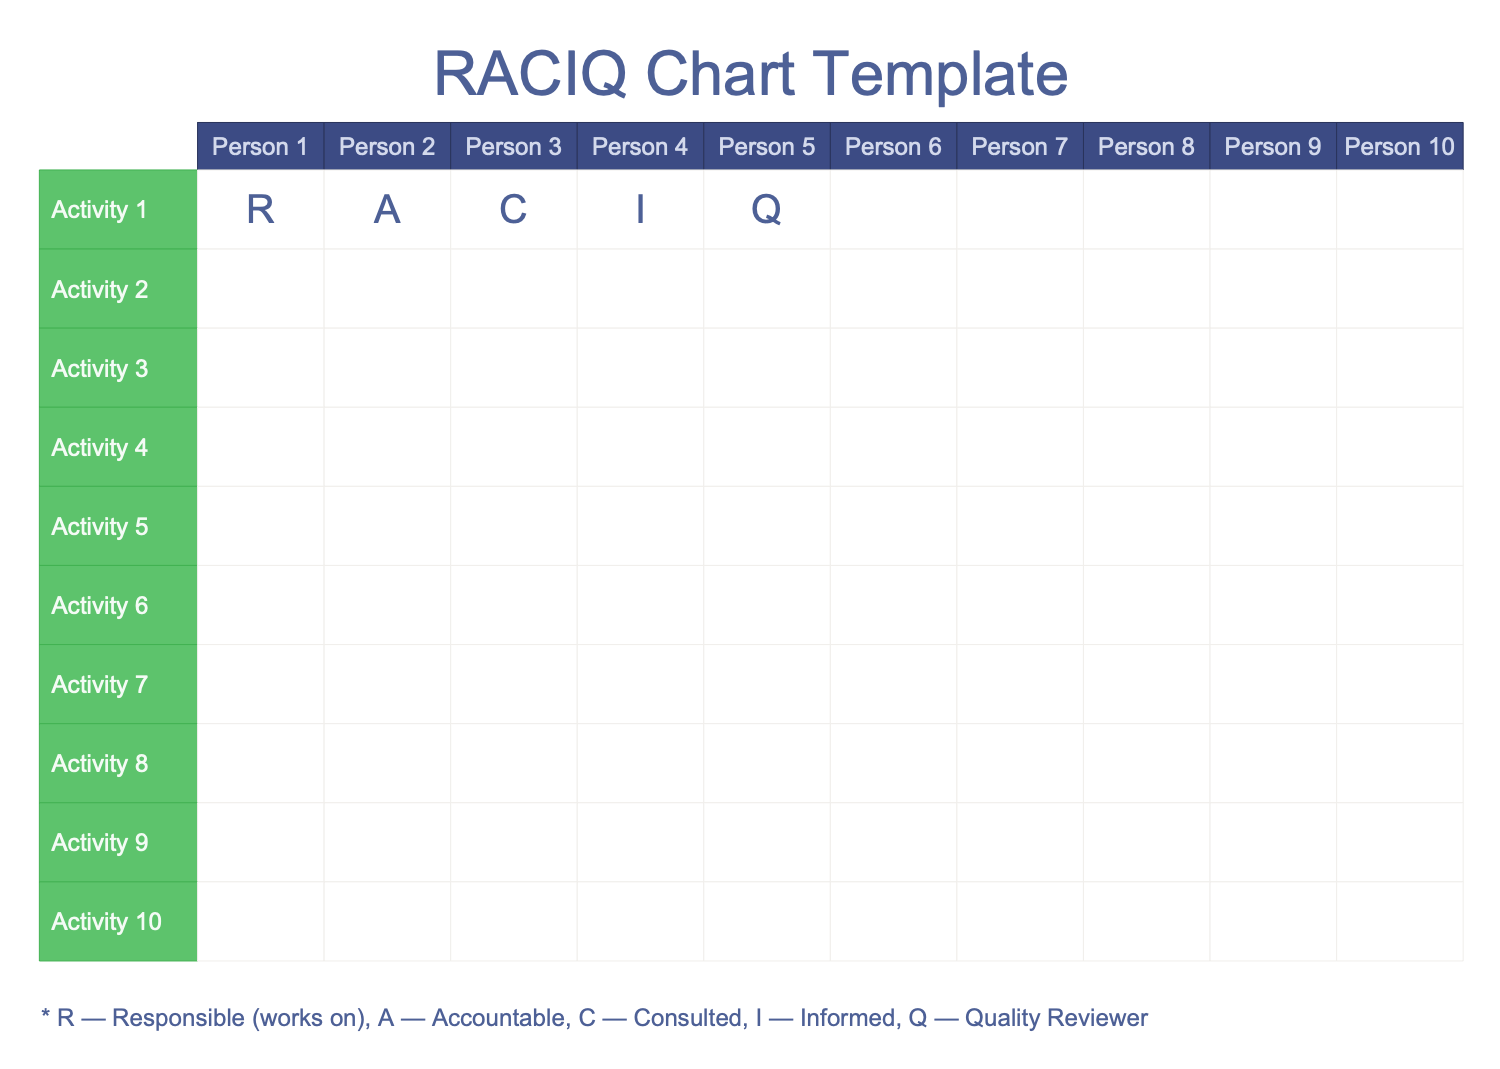 RACIQ Chart Template